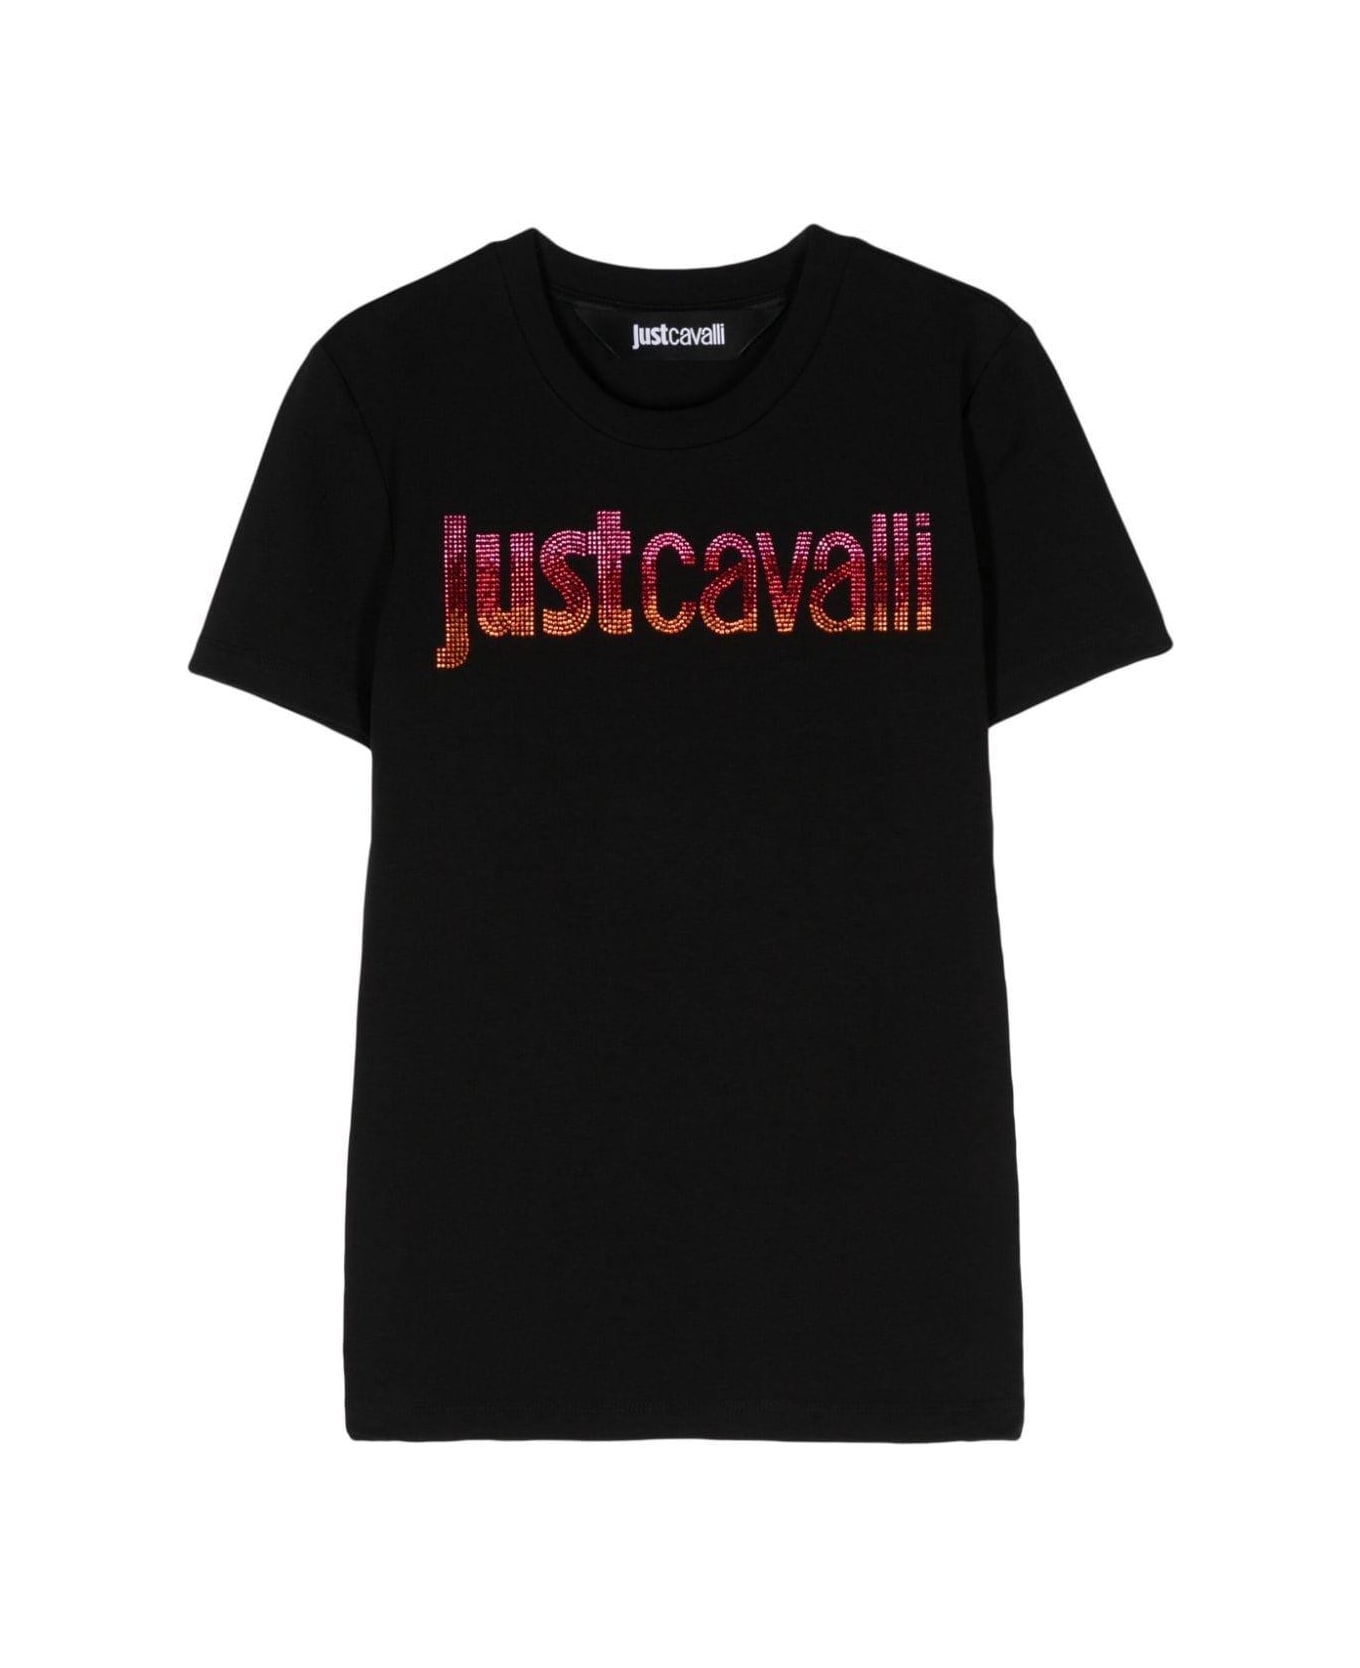 Just Cavalli Embellished Crewneck T-shirt - Black Tシャツ